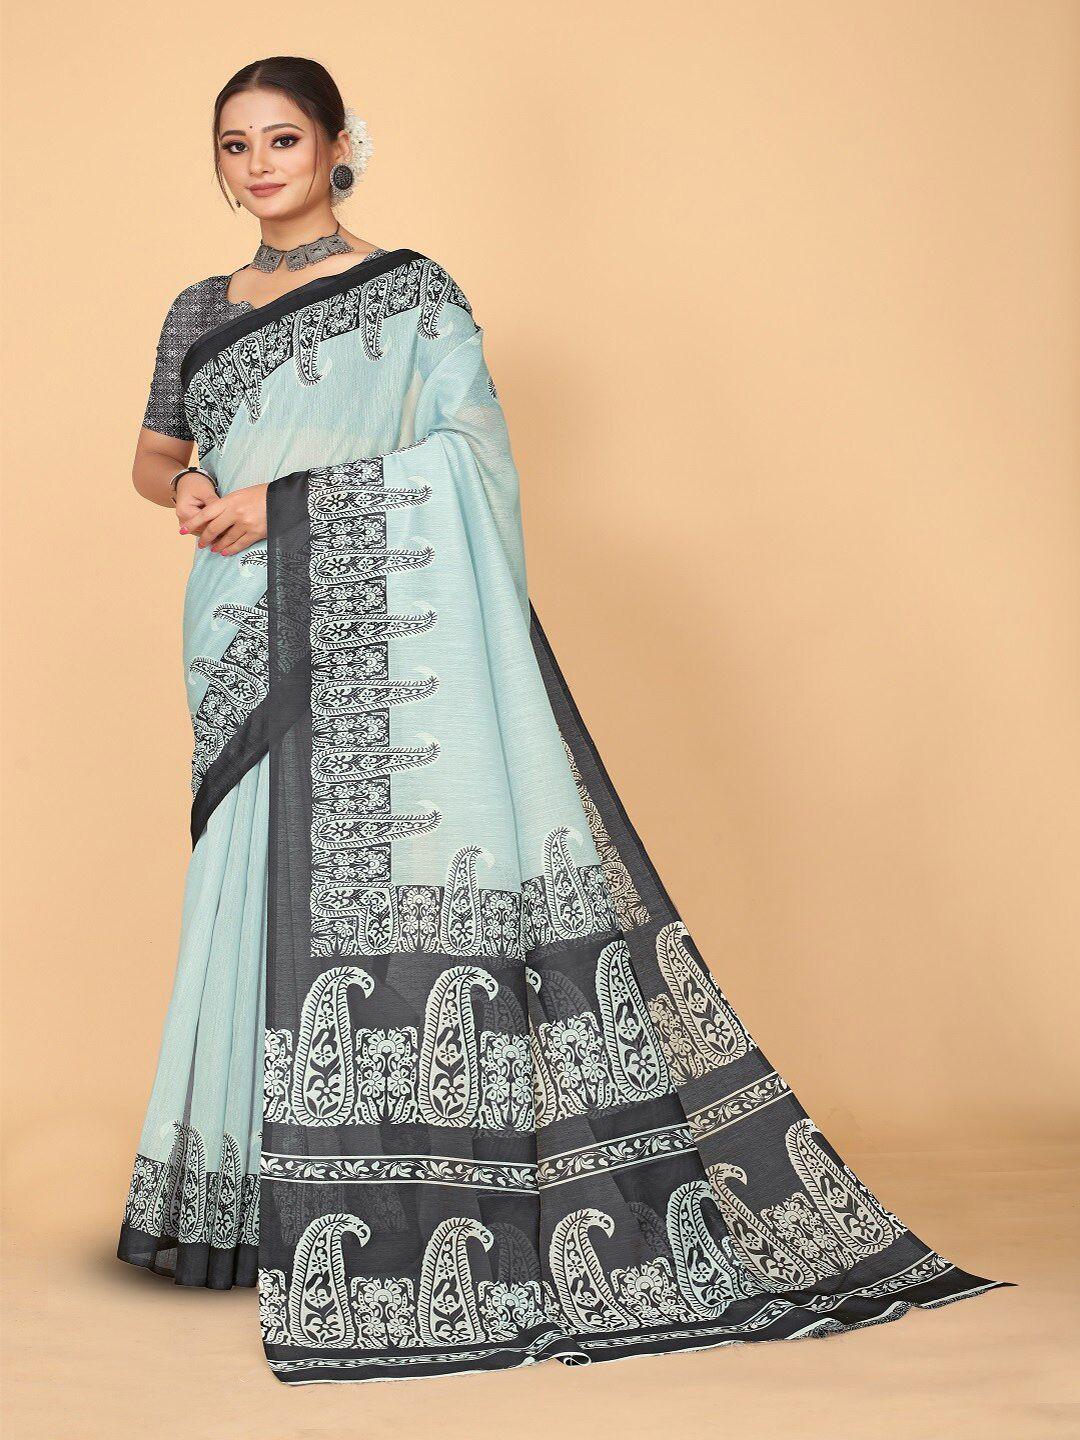 vishwa vijay ethnic motifs printed chanderi saree